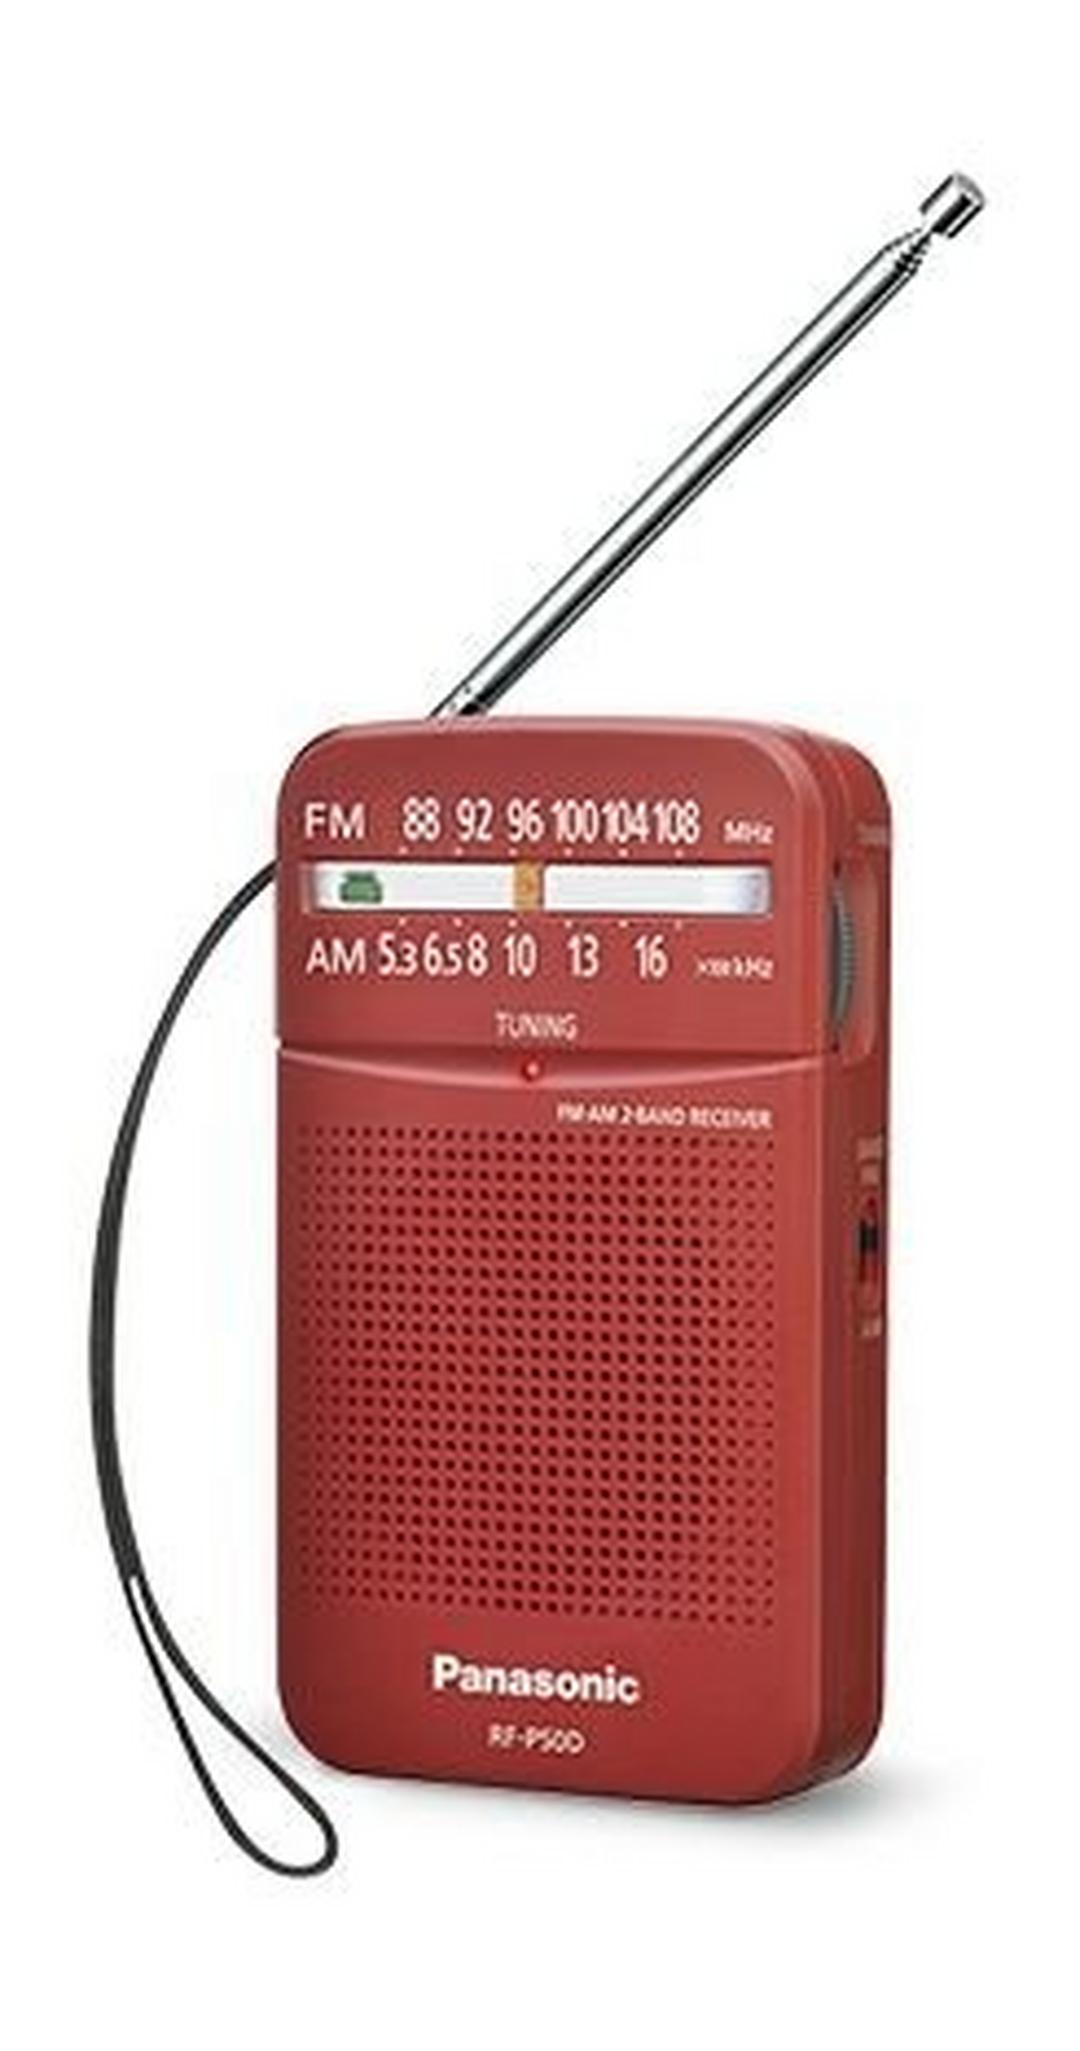 Panasonic Portable FM/AM Radio - Red